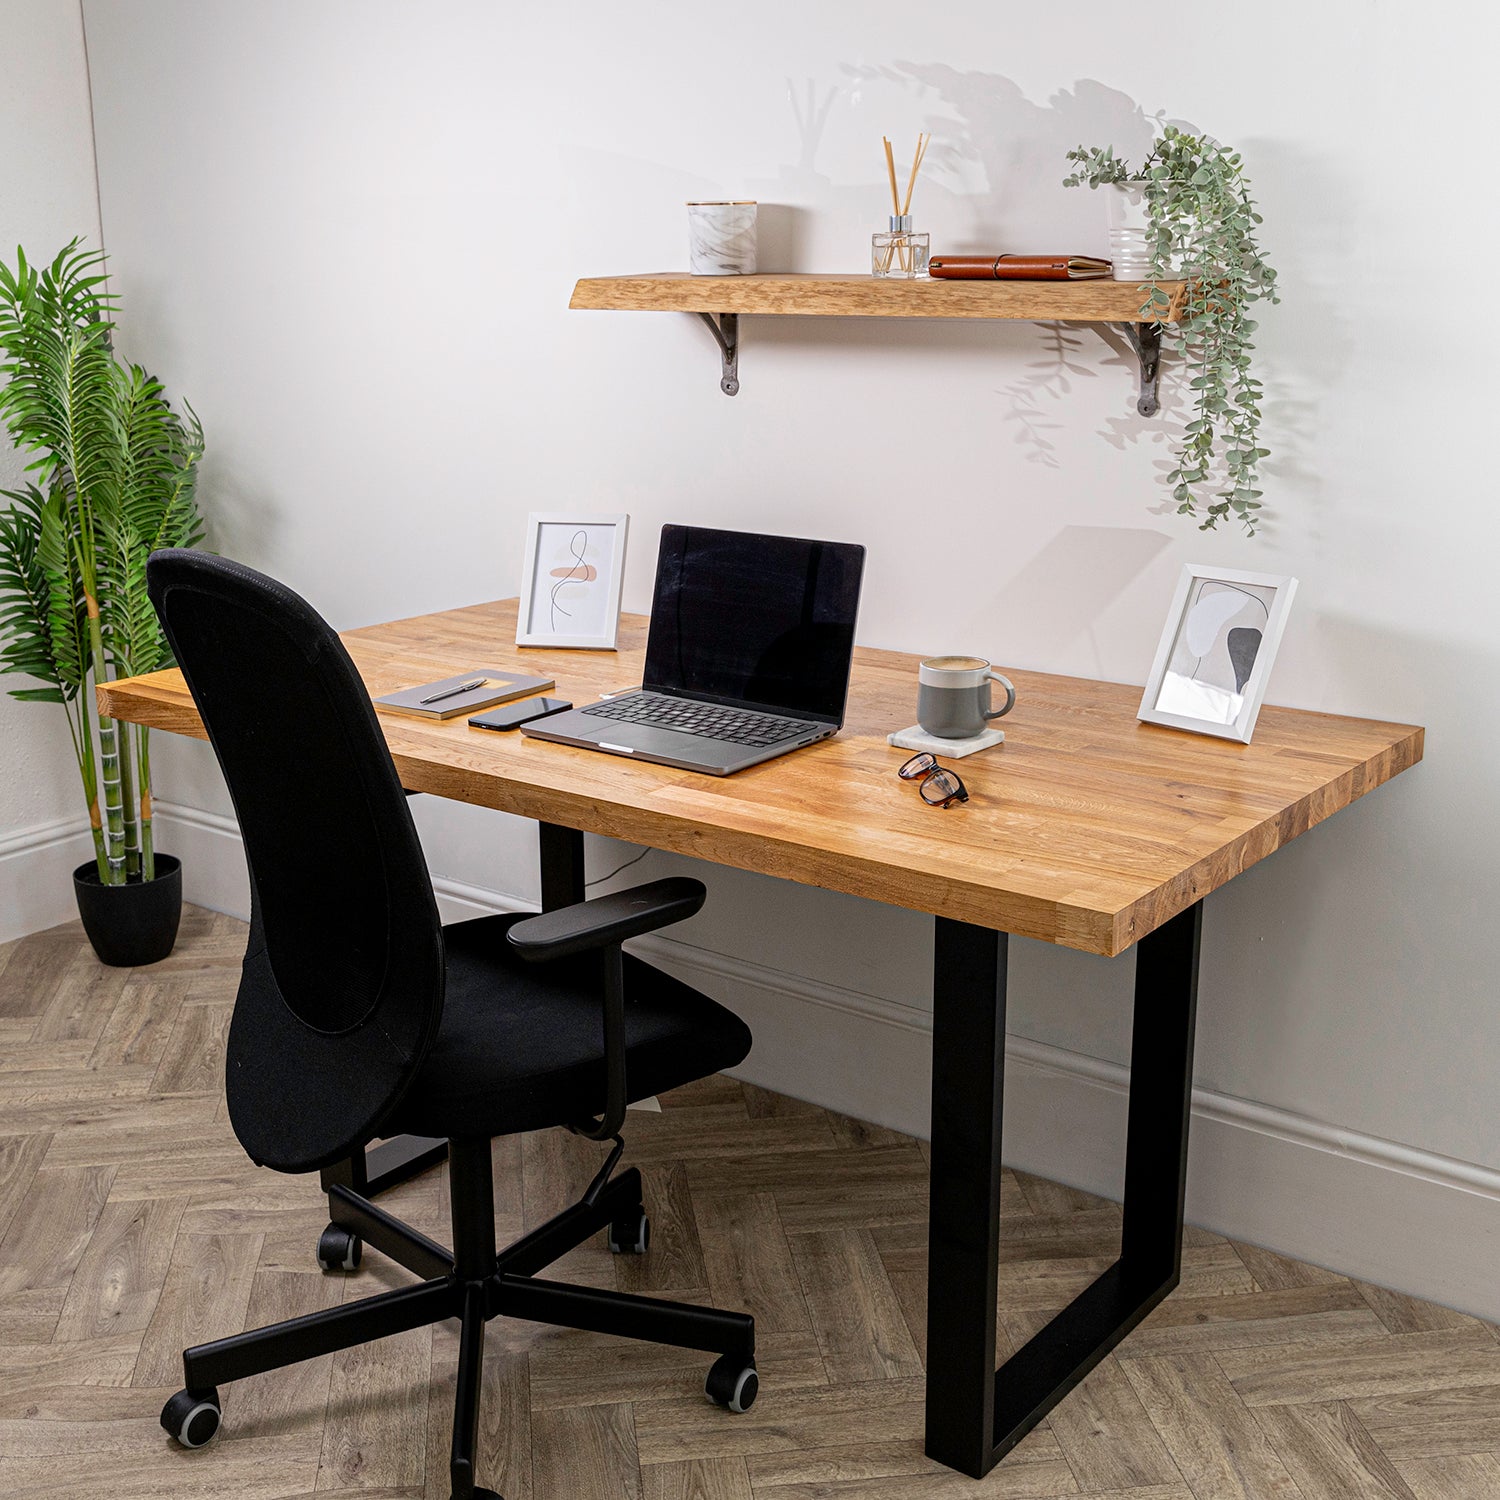 Oak Solid Wood Desk with Square Metal Legs - 40mm thick desktop